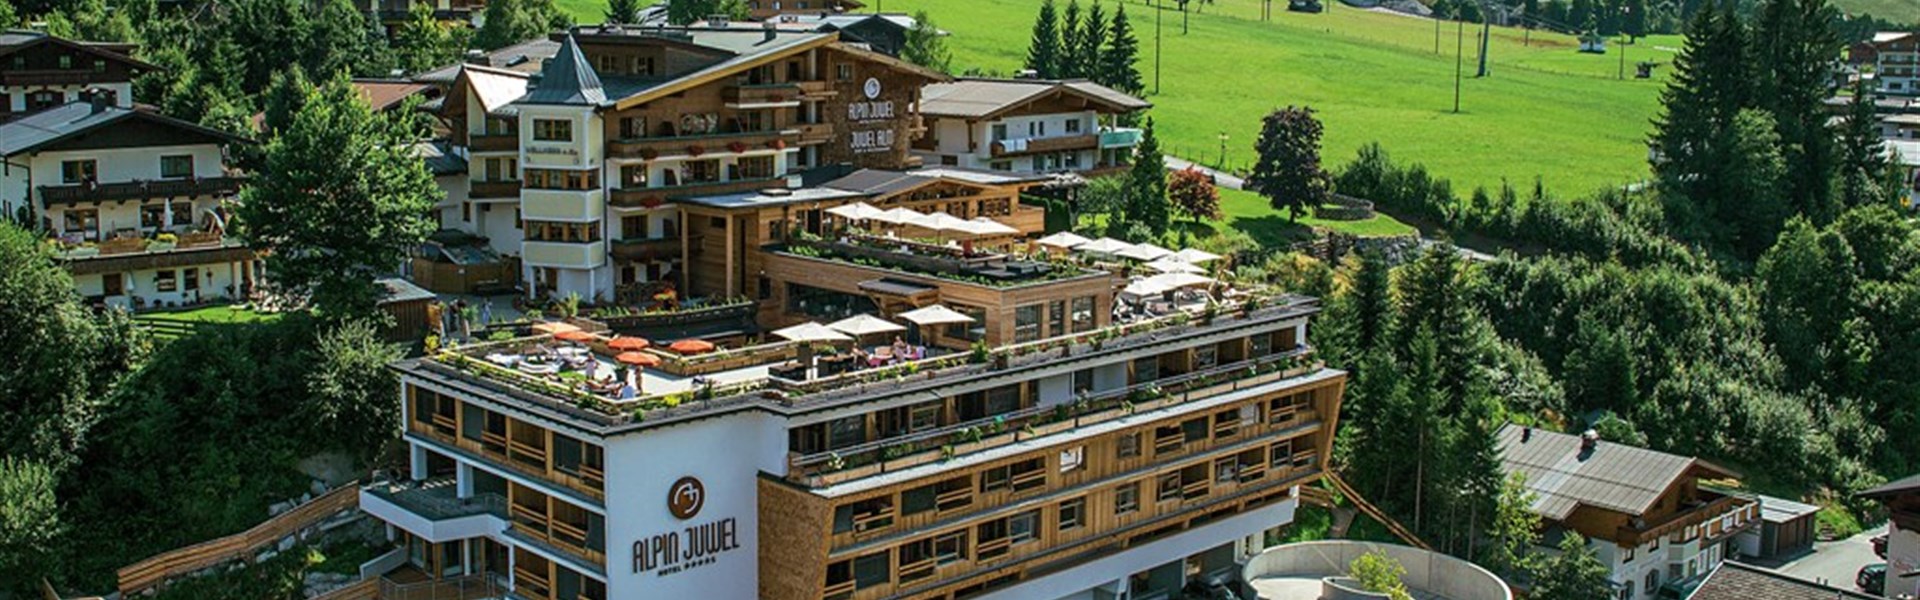 Hotel Alpin Juwel (S) - 